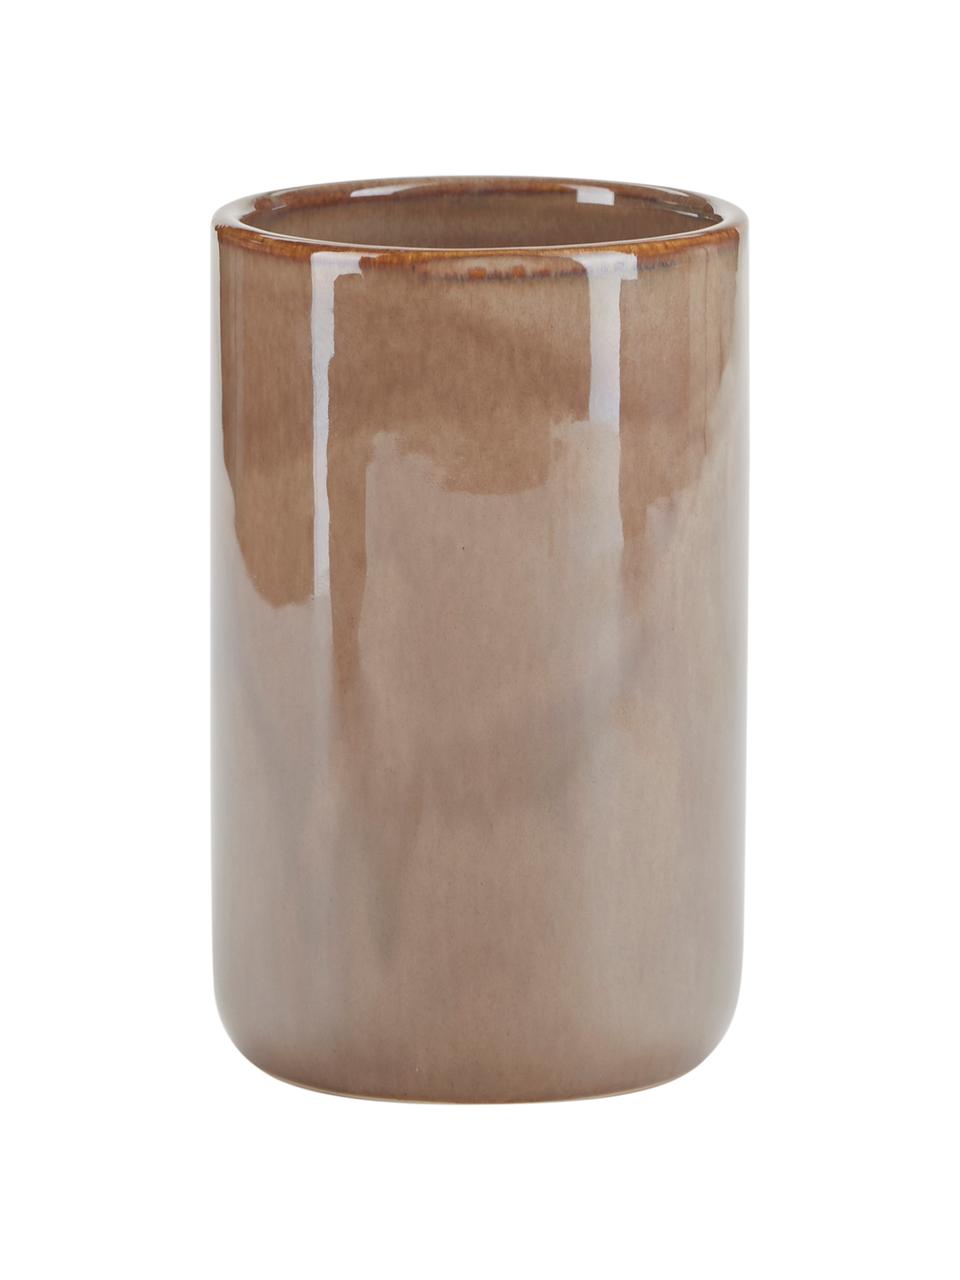 Zahnputzbecher Tin aus Keramik in Braun, Keramik, Braun, Ø 8 x H 12 cm